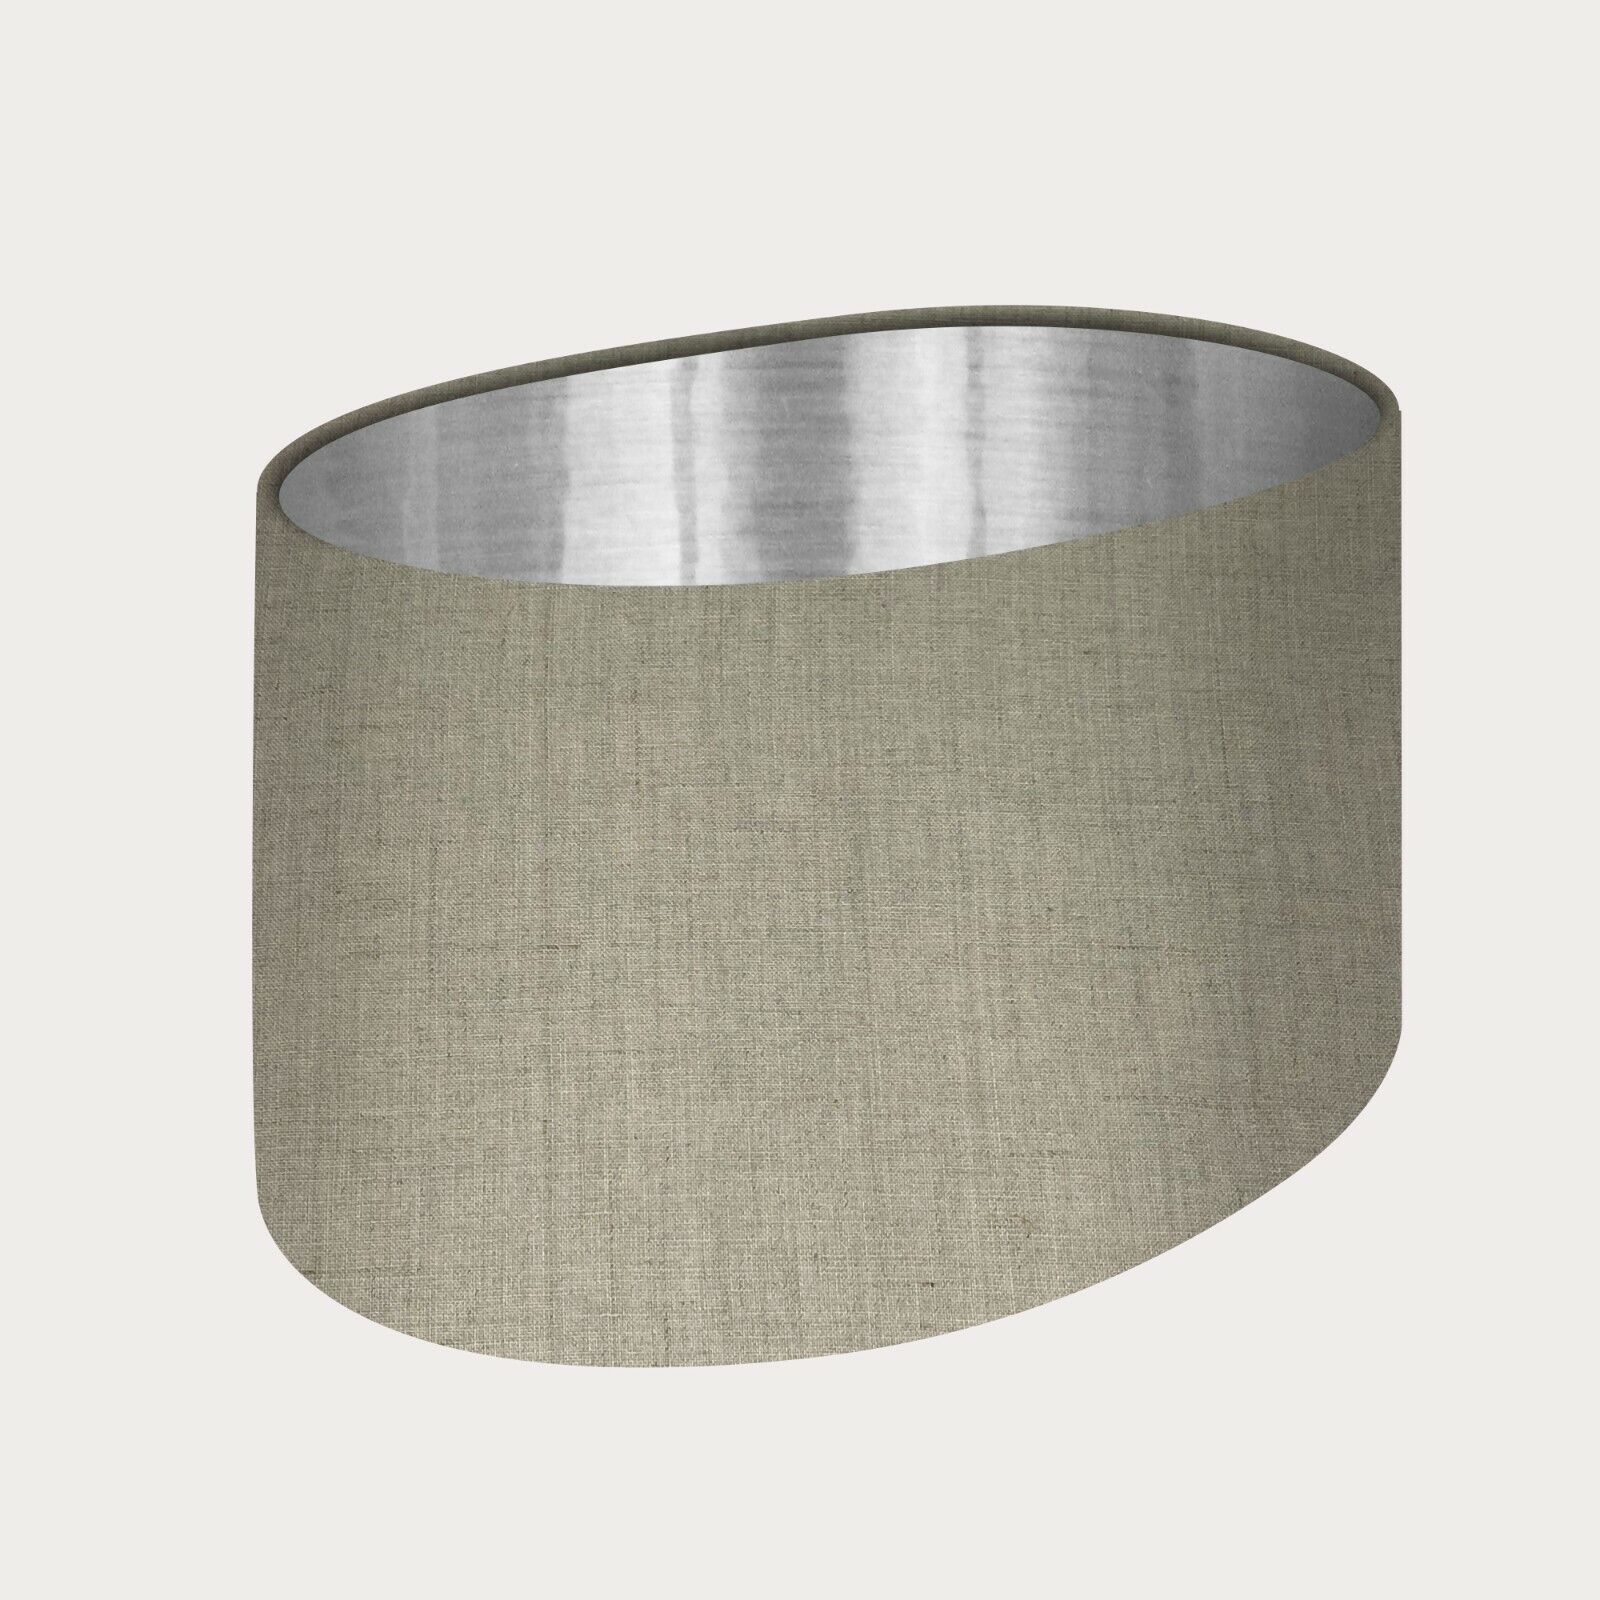 Lampshade Natural Beige Textured 100% Linen Brushed Silver Oval Light Shade Kupowanie bomb, WYPRZEDAŻ